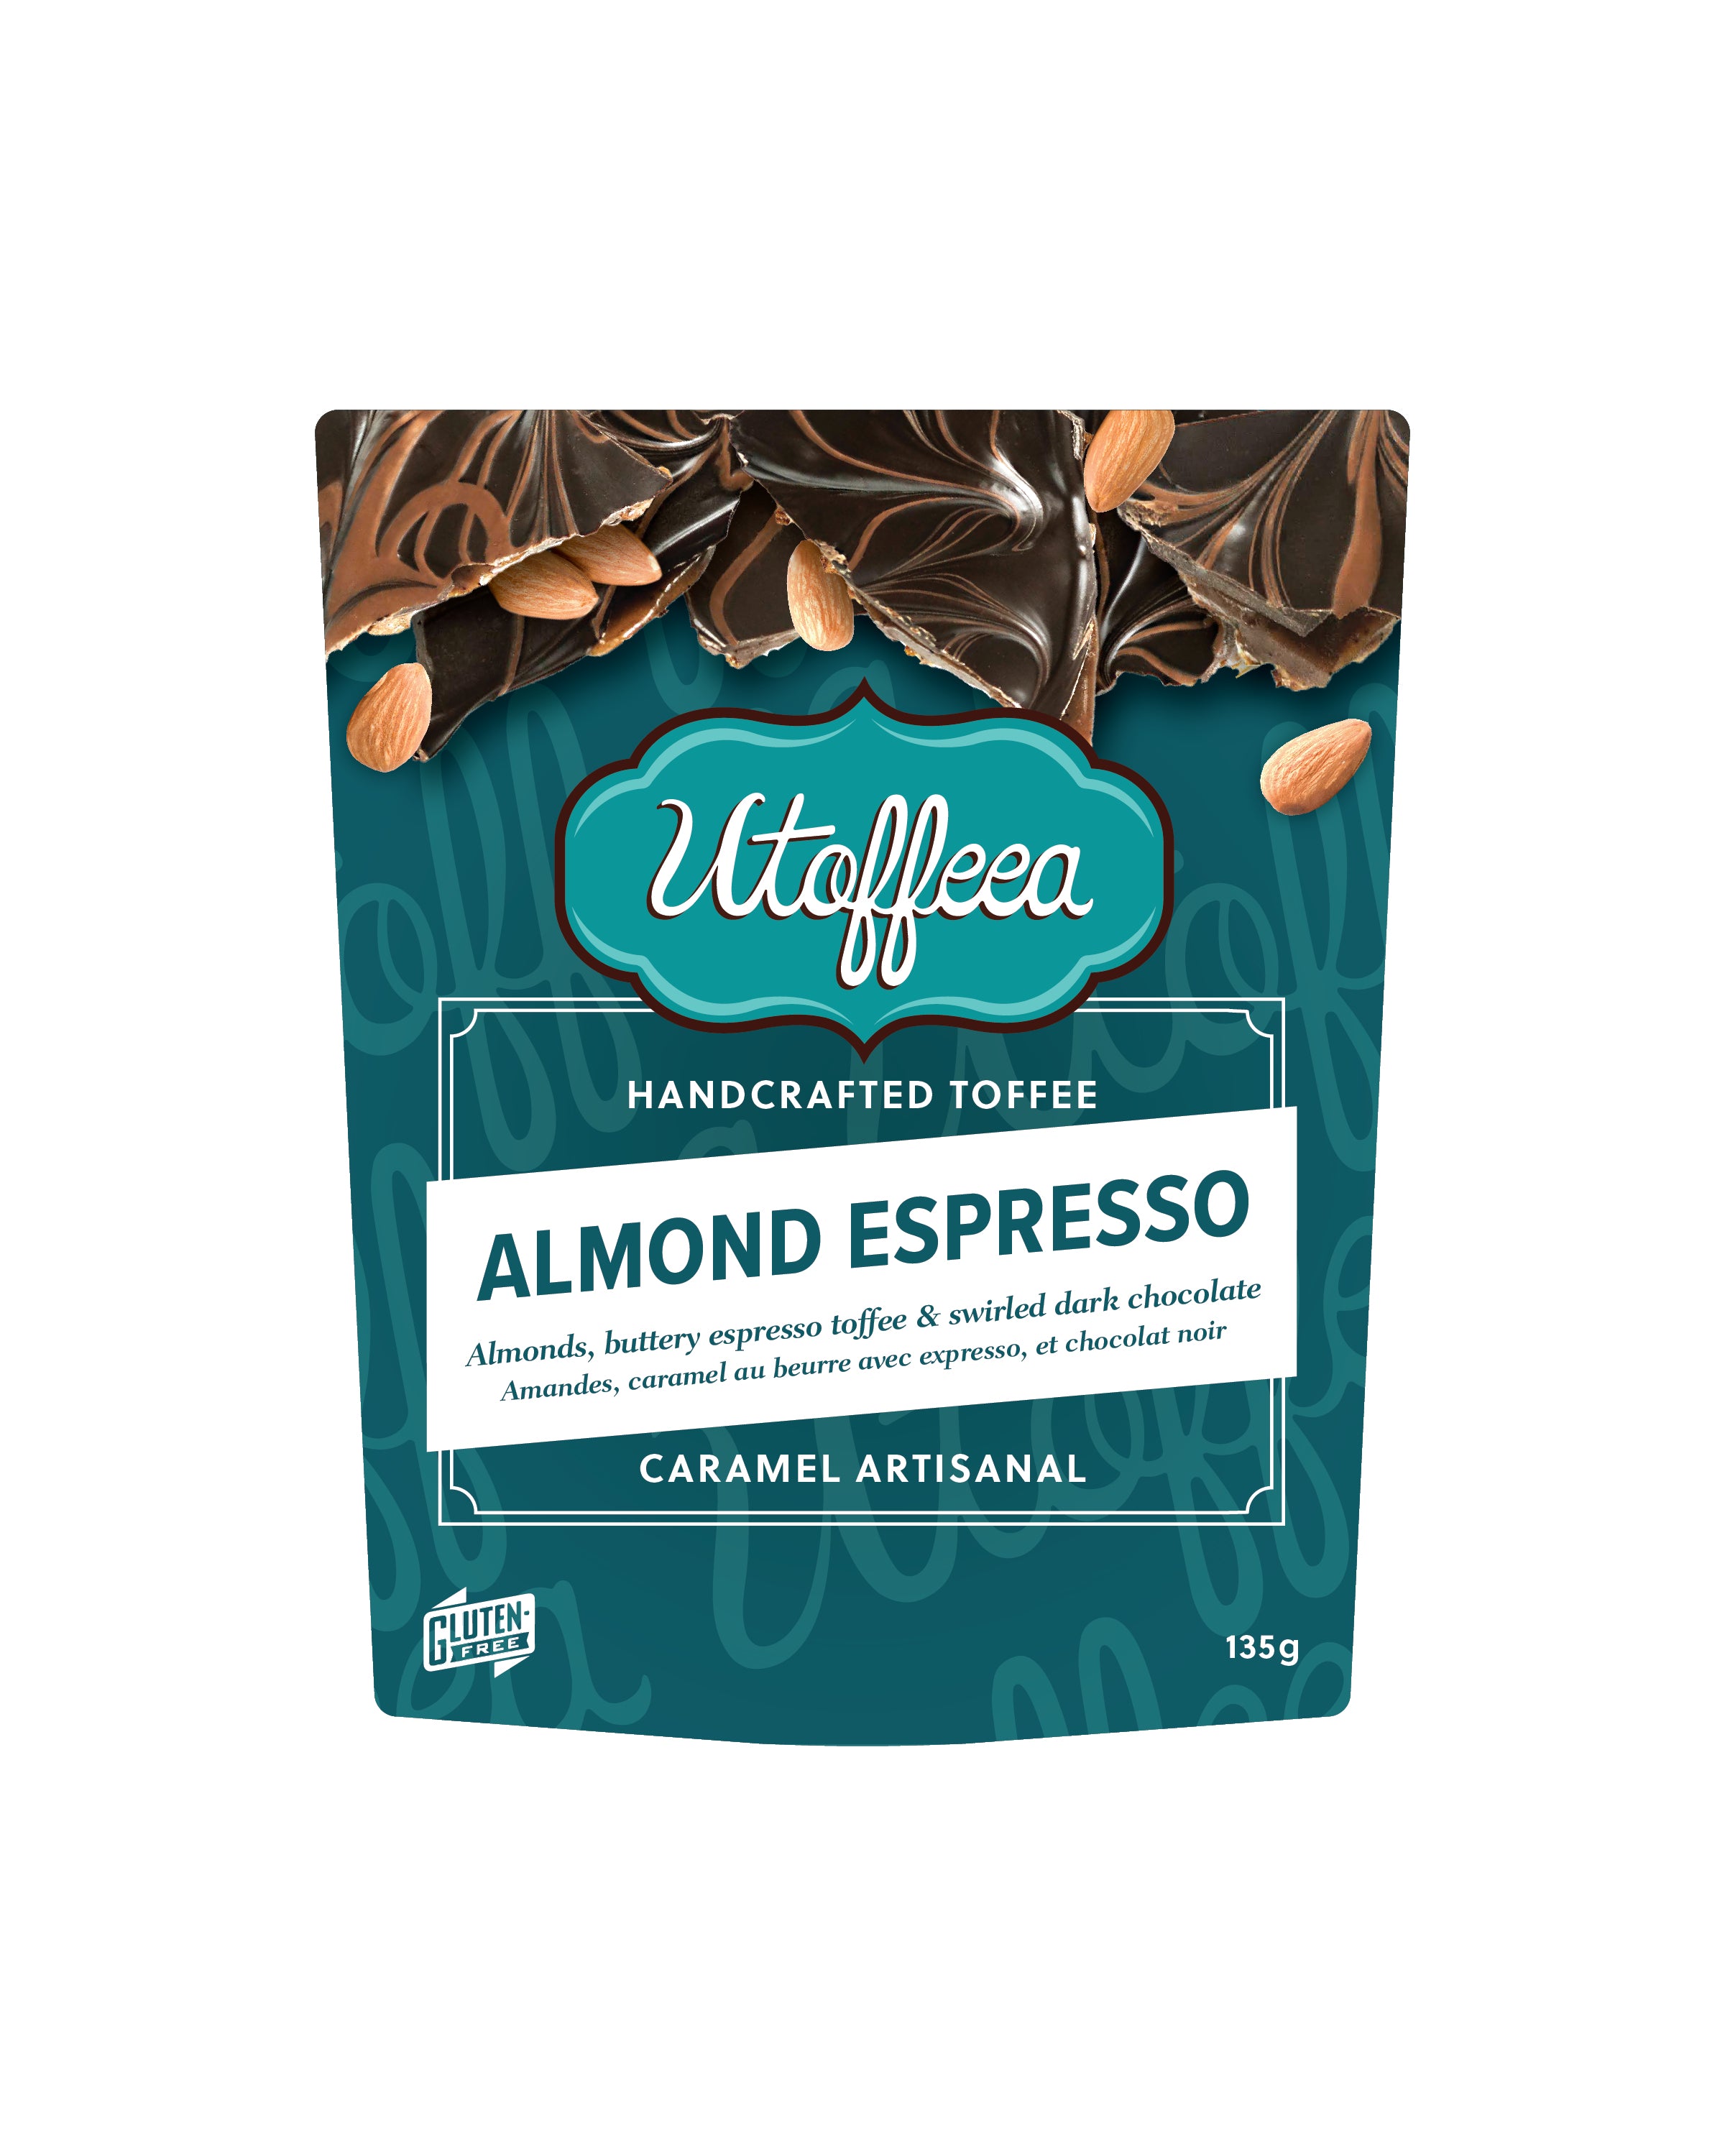 Utoffeea - Almond Espresso